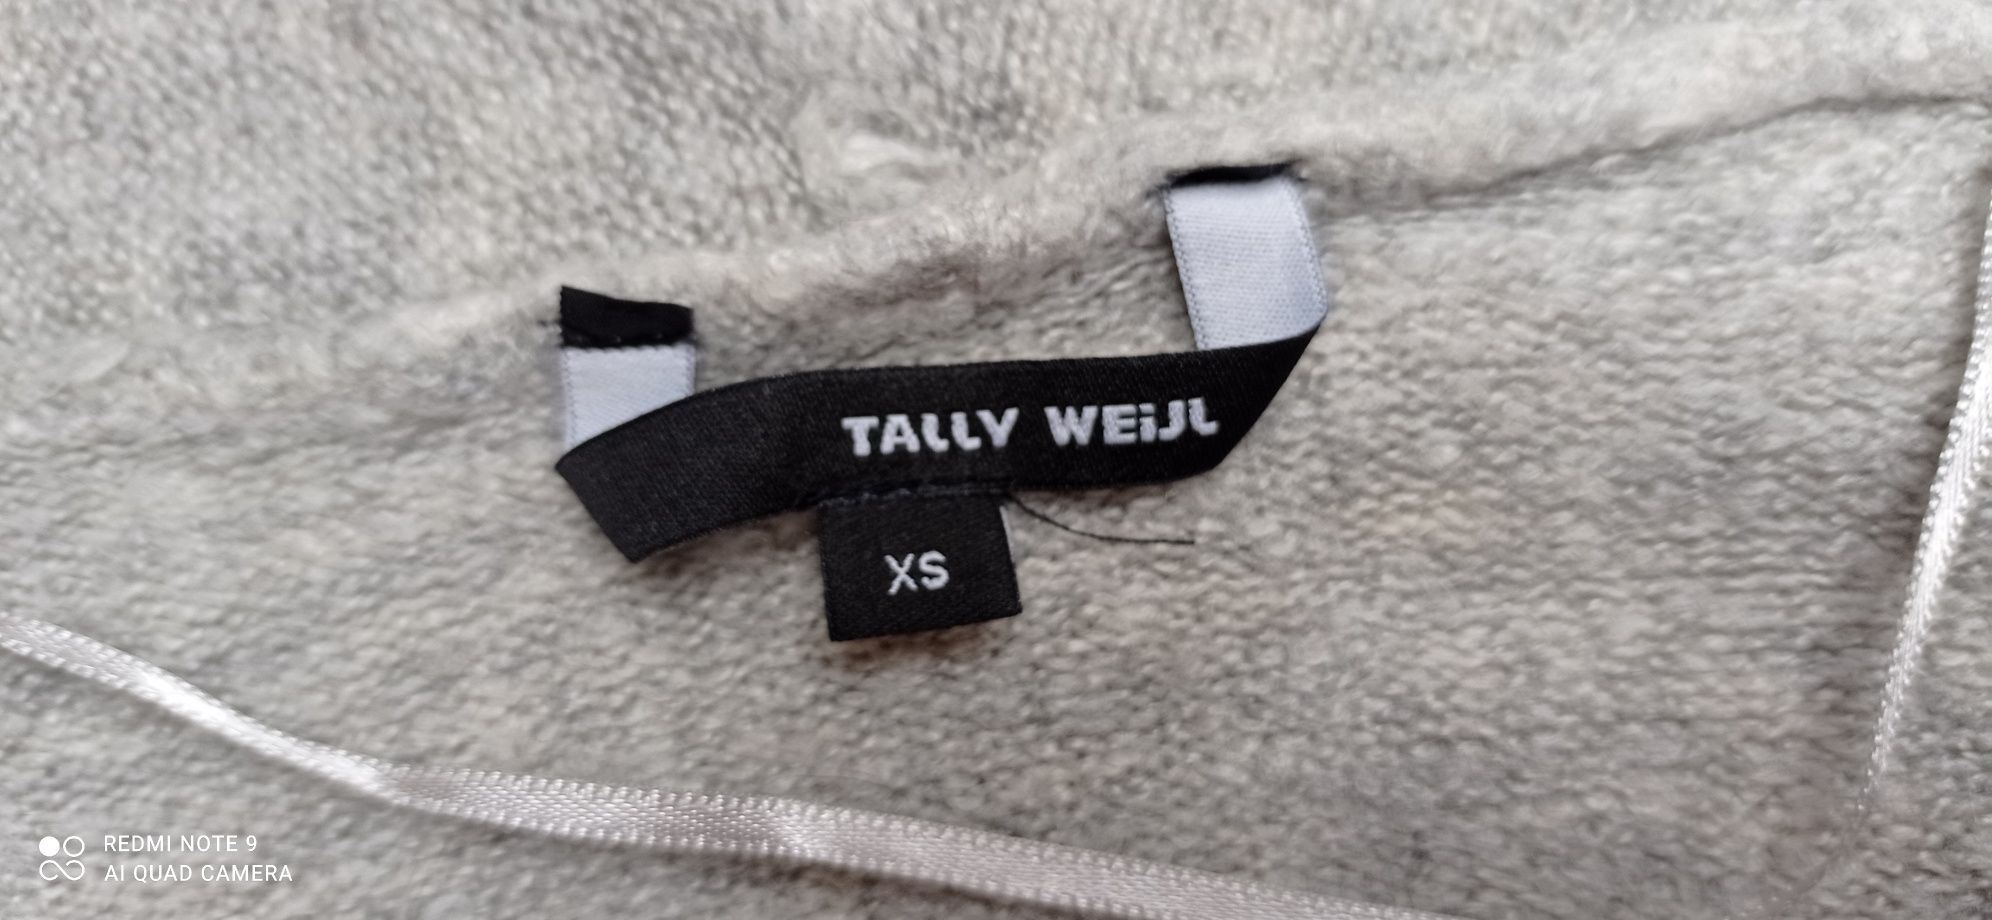 Sweterek Tally Weijl XS